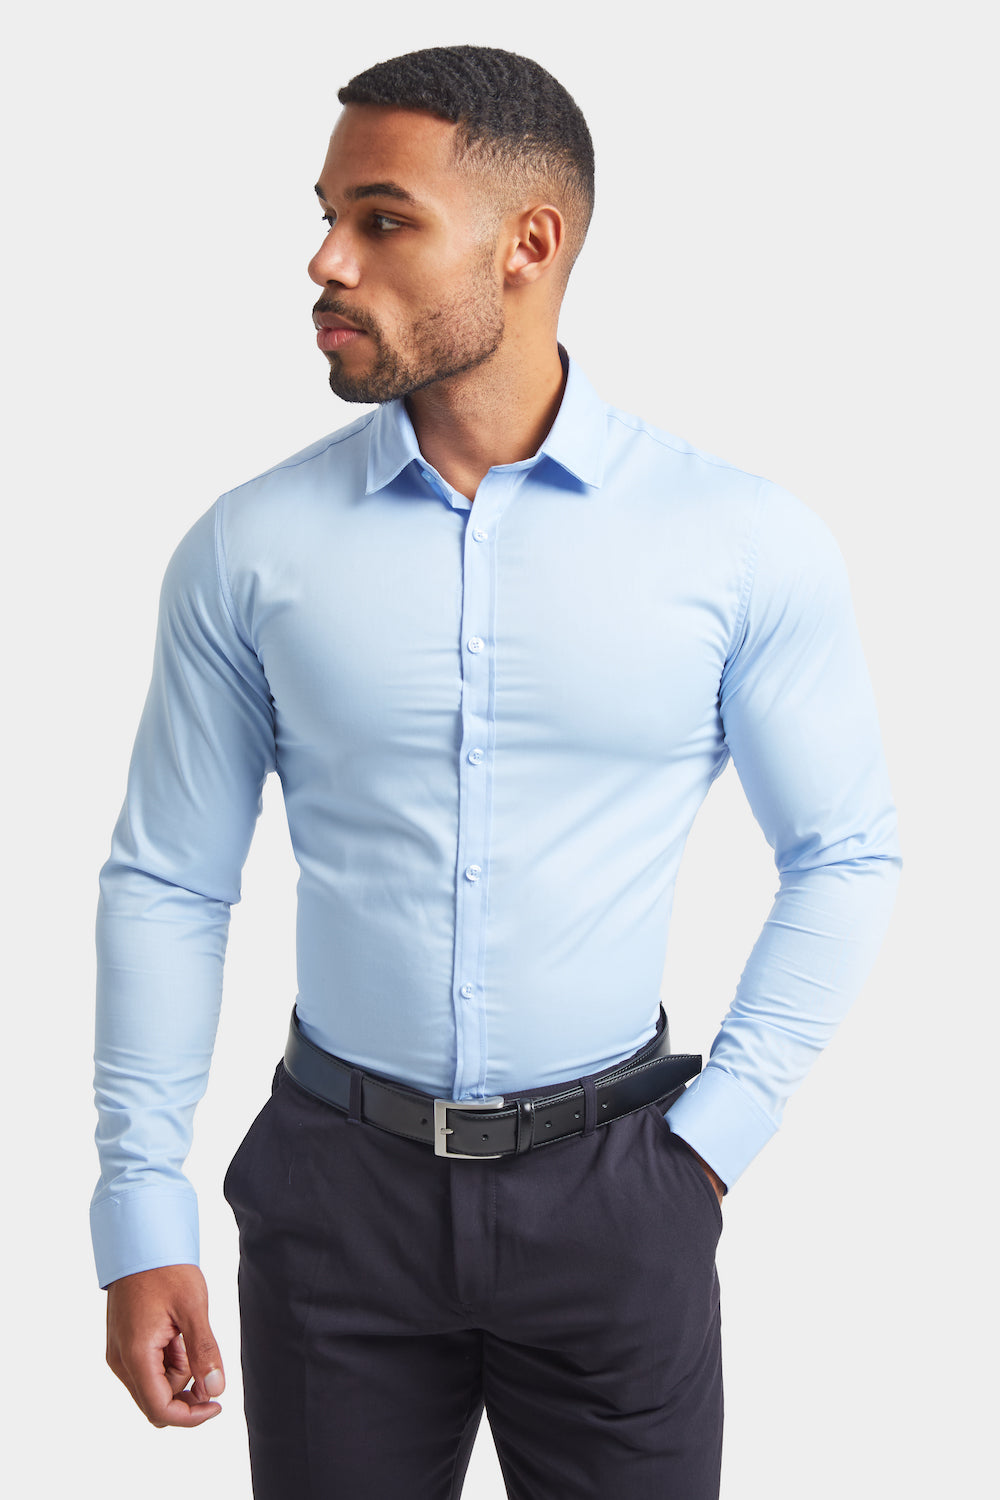 Men's Slim Fit Dress Shirts  Buy Slim Fit Dress Shirts for Men